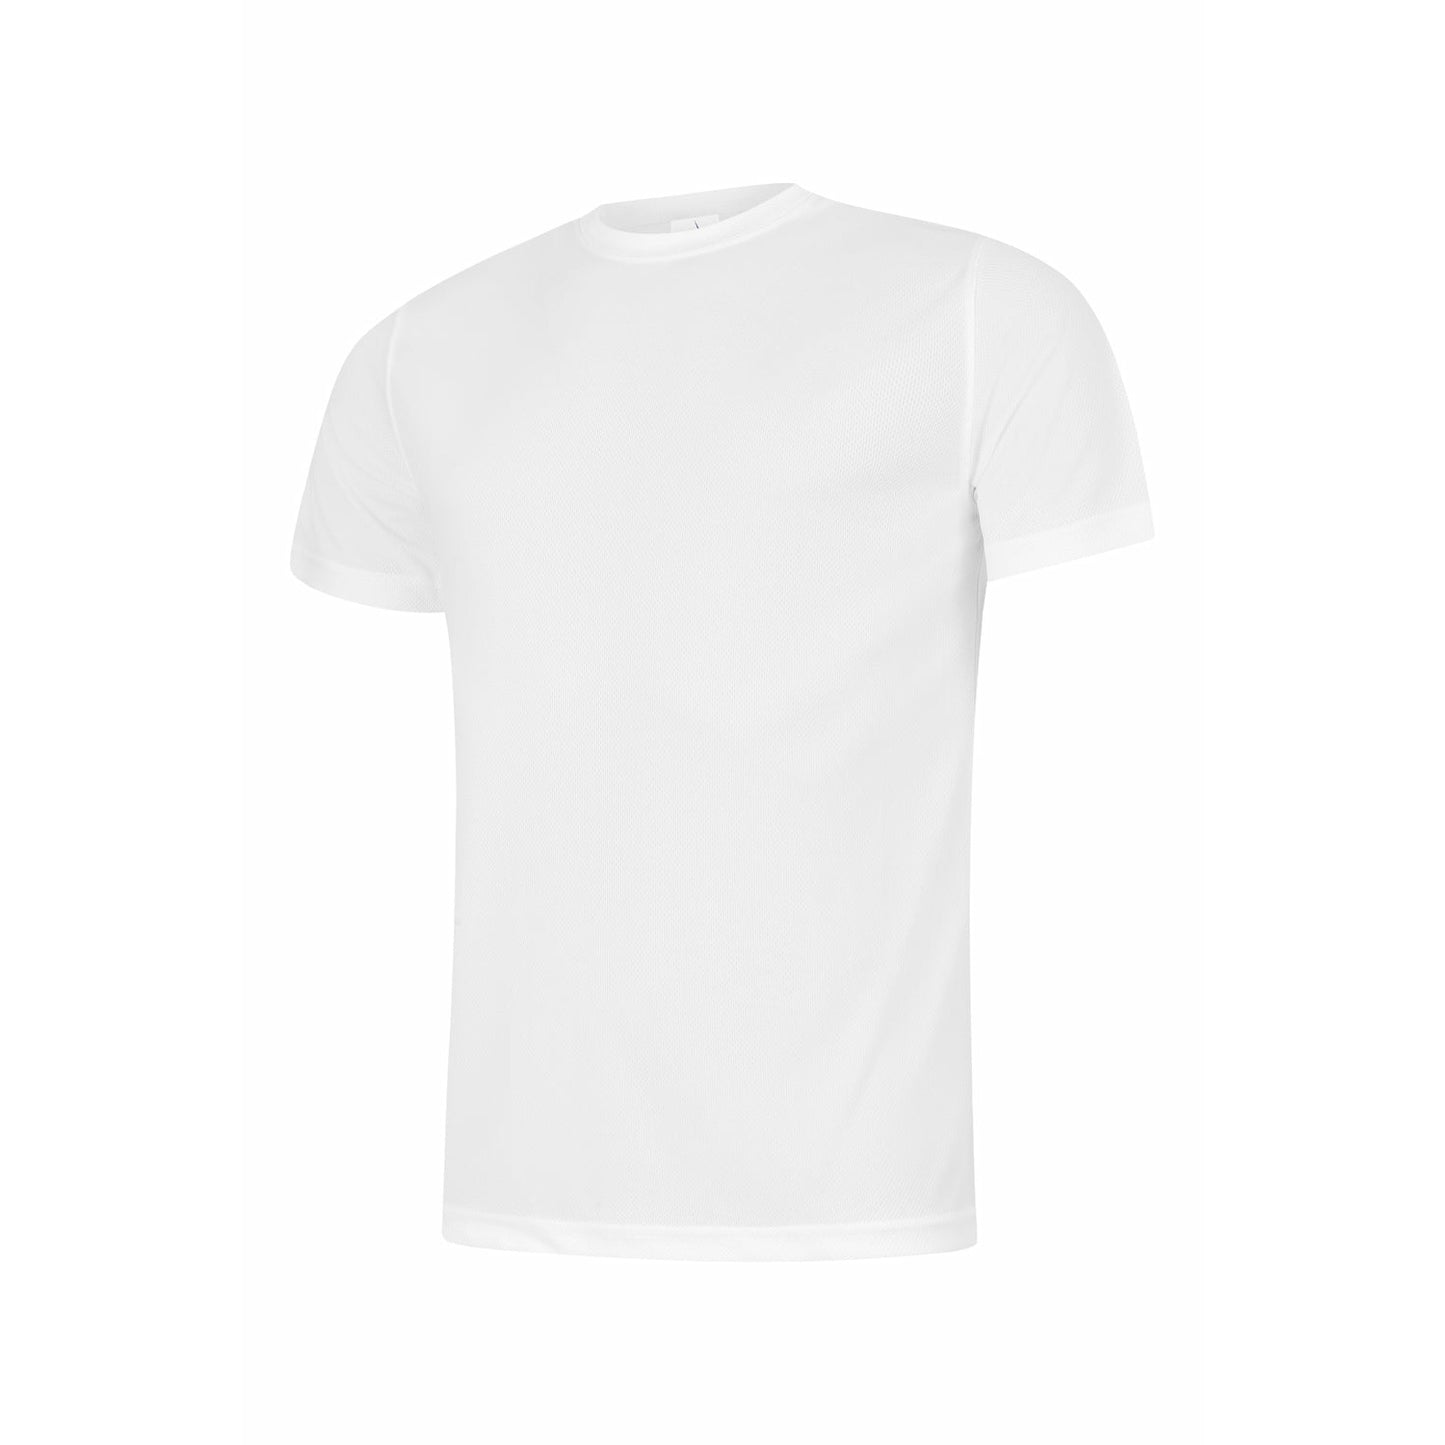 mens-ultra-cool-t-shirt White